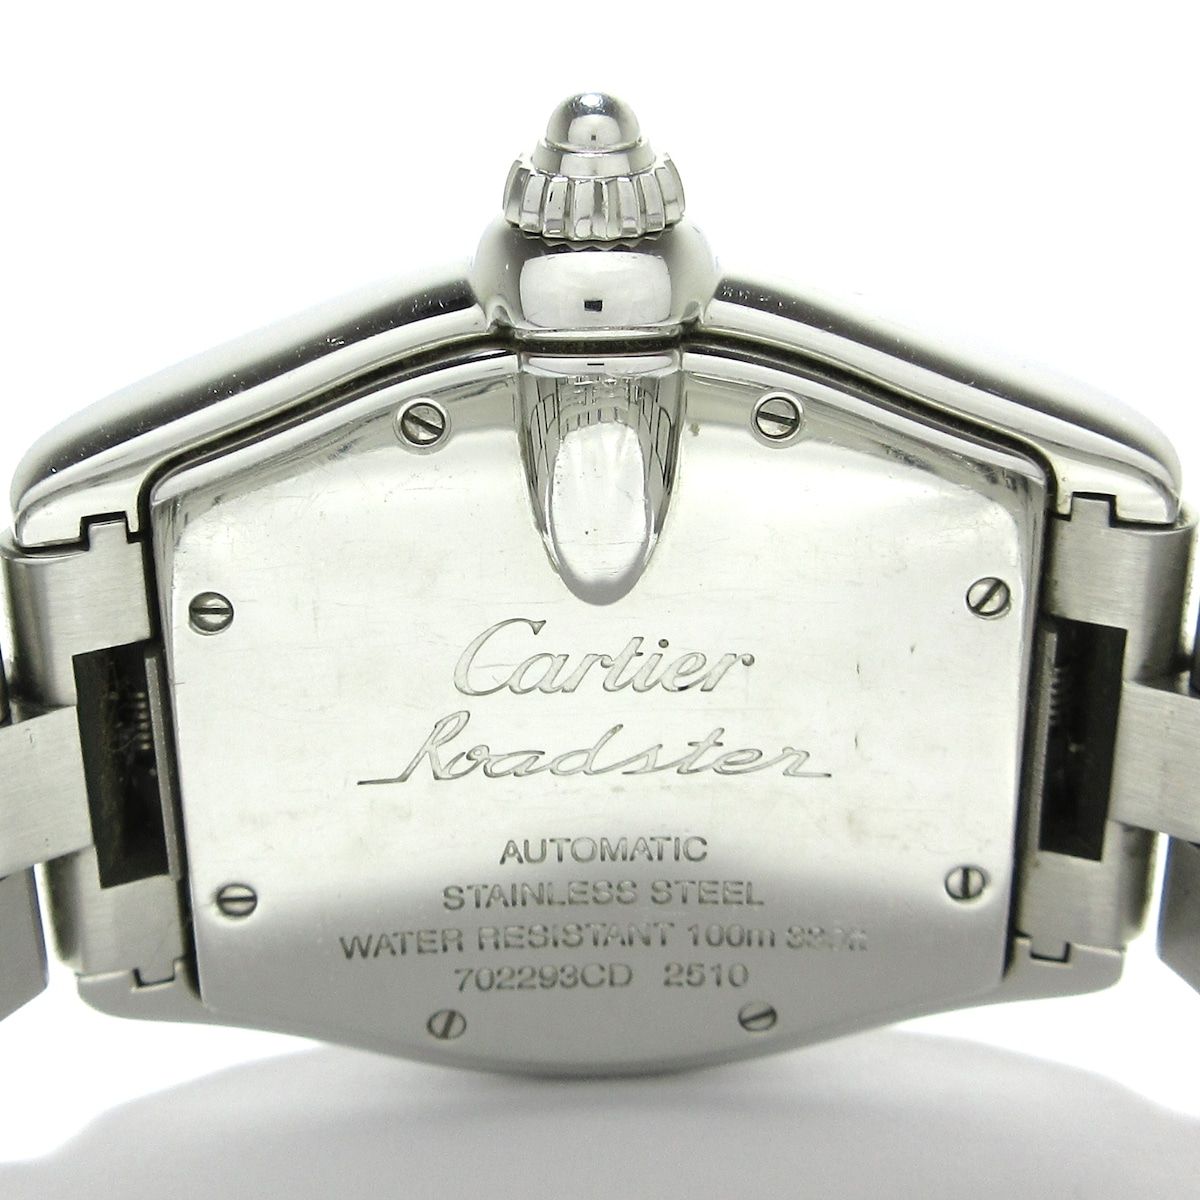 Cartier(カルティエ) 腕時計 ロードスターLM W62002V3 メンズ SS 黒 - メルカリ